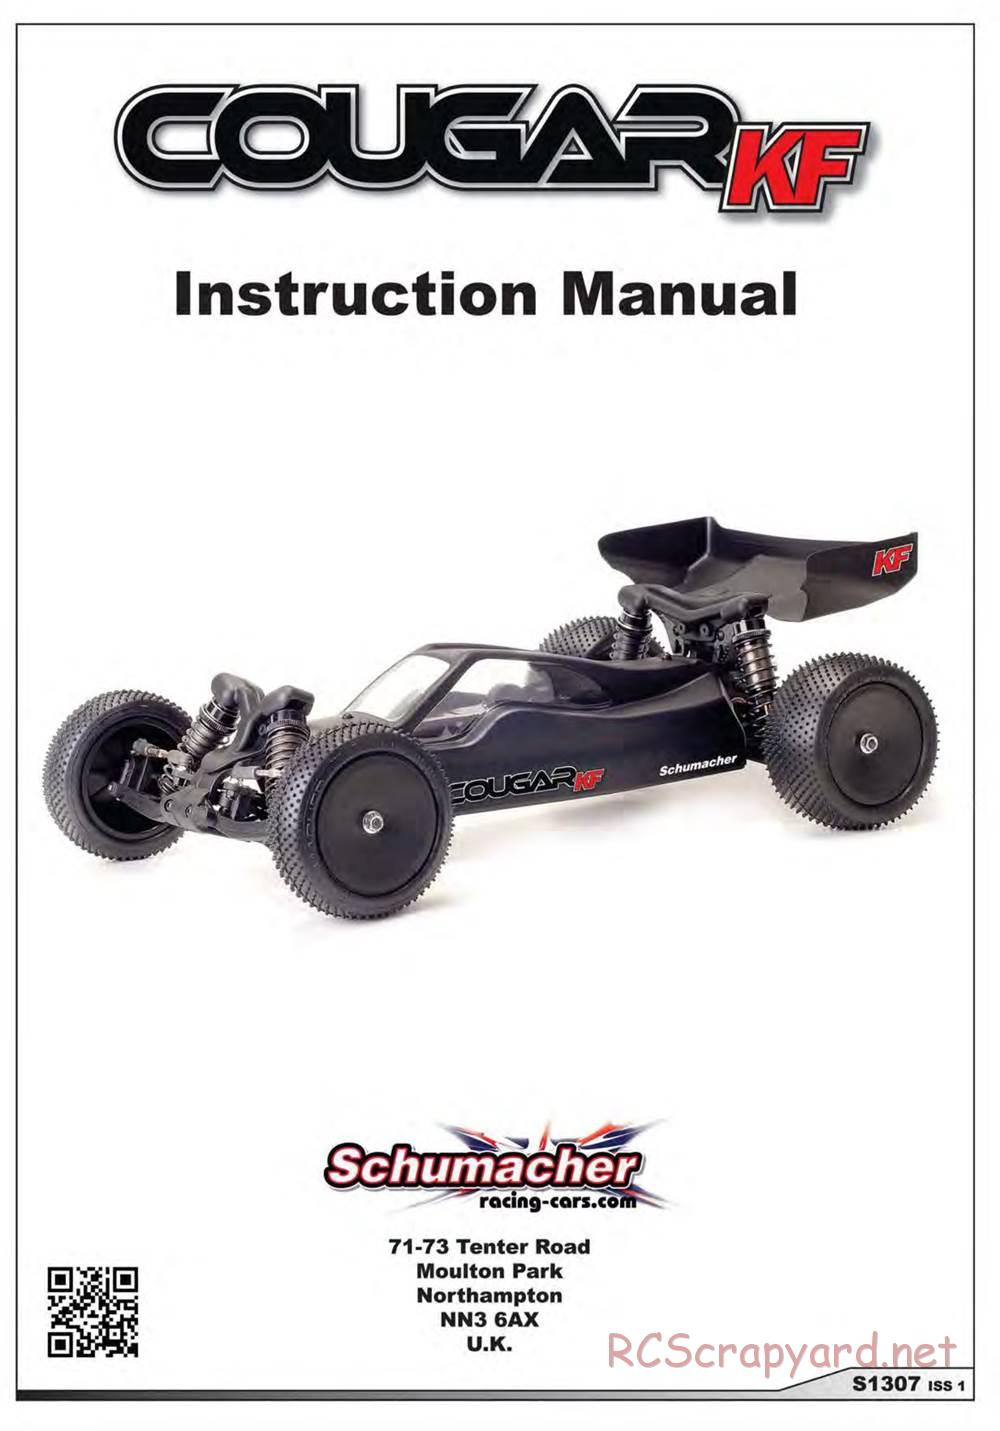 Schumacher - Cougar KF - Manual - Page 1